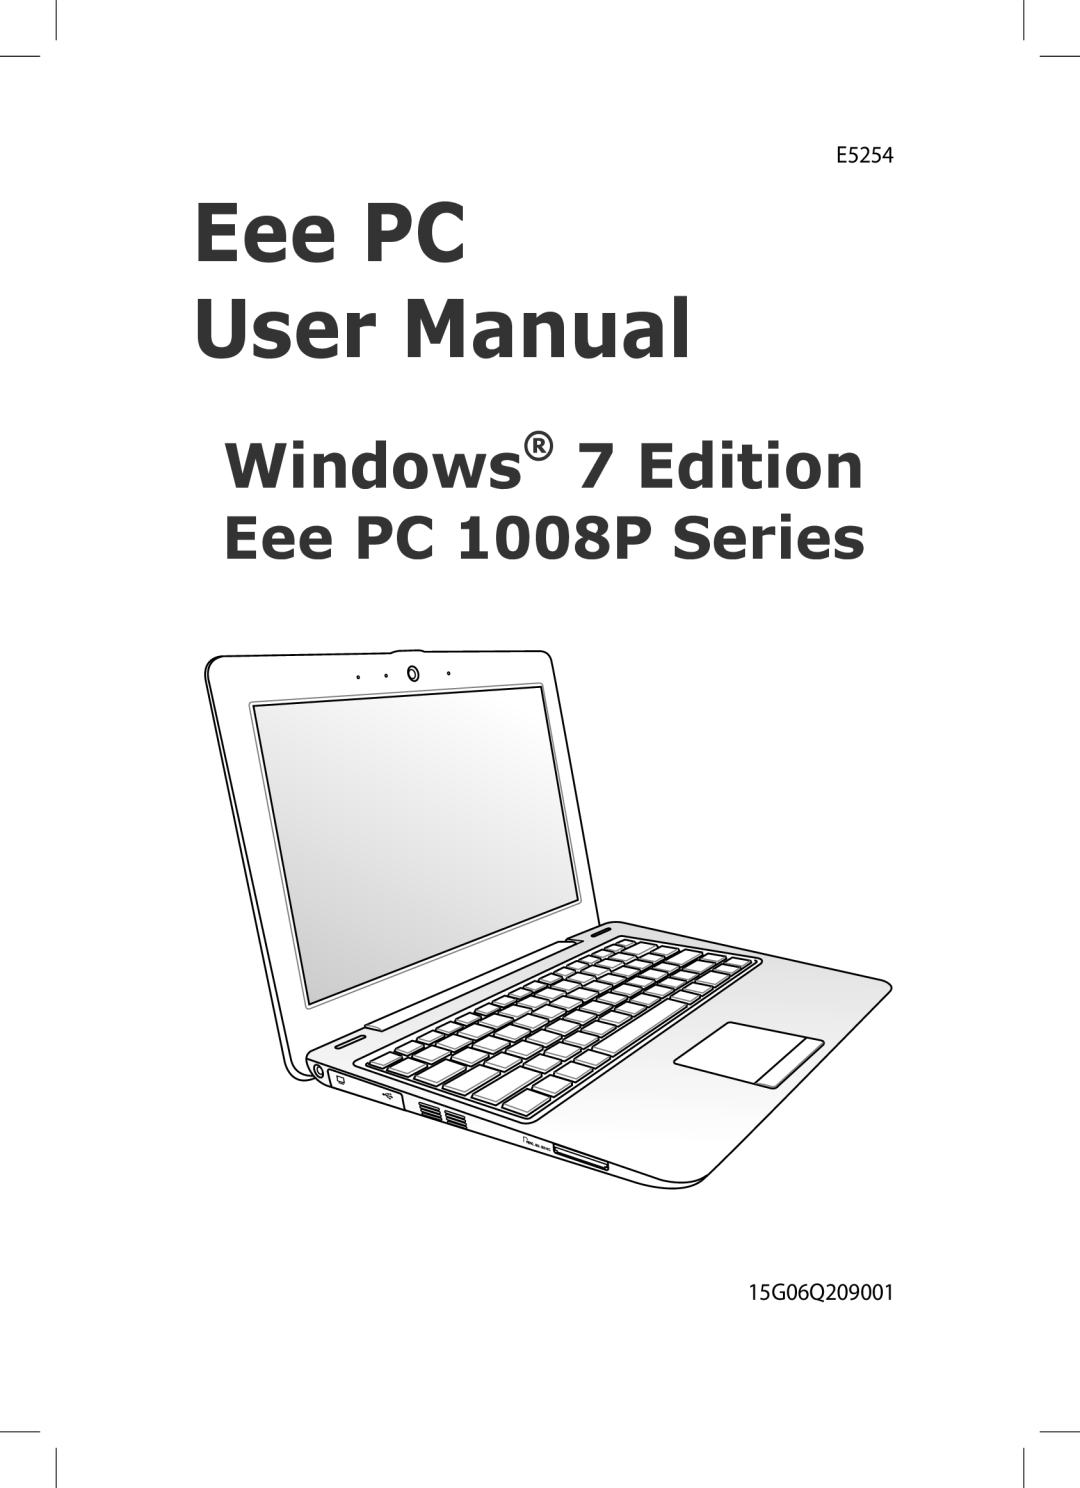 Asus 1008P-KR-PU27-PI user manual Eee PC 